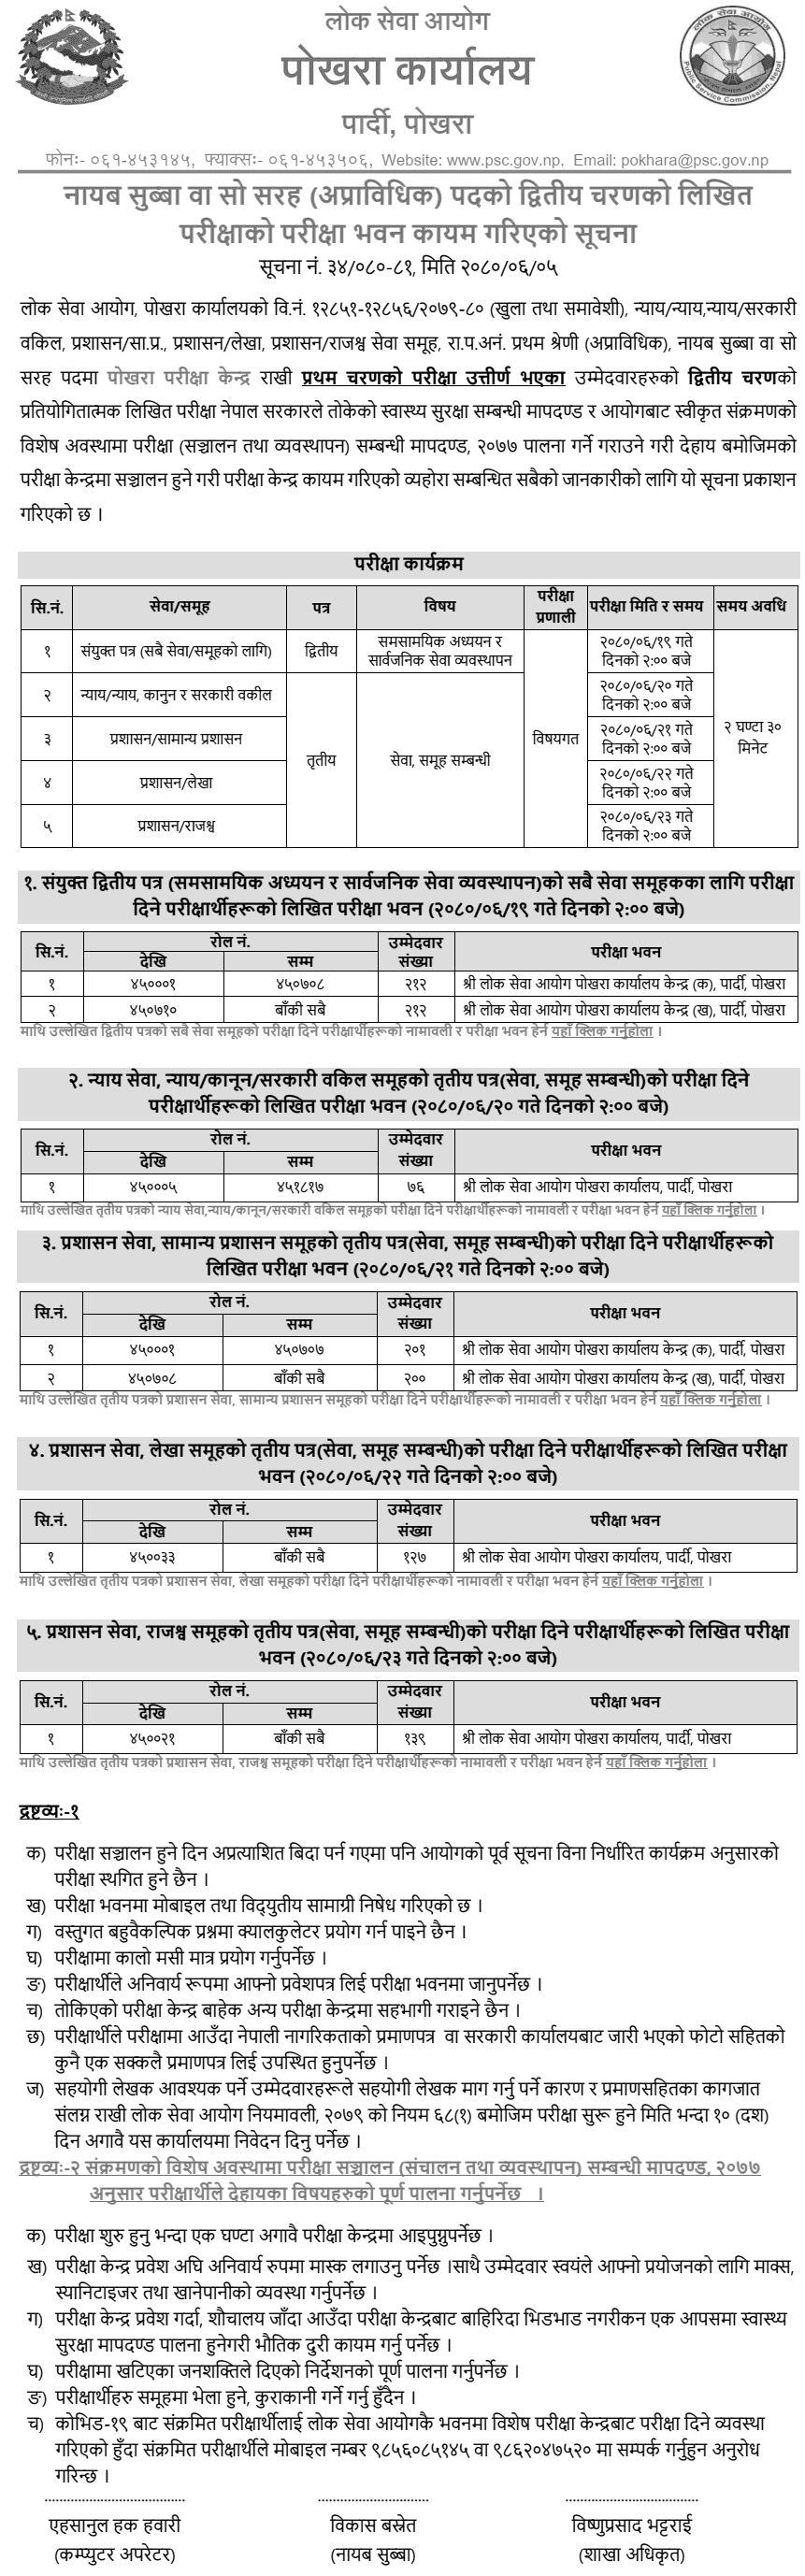 Lok Sewa Aayog Pokhara 2nd Phase Written Exam Center of Nayab Subba 2080